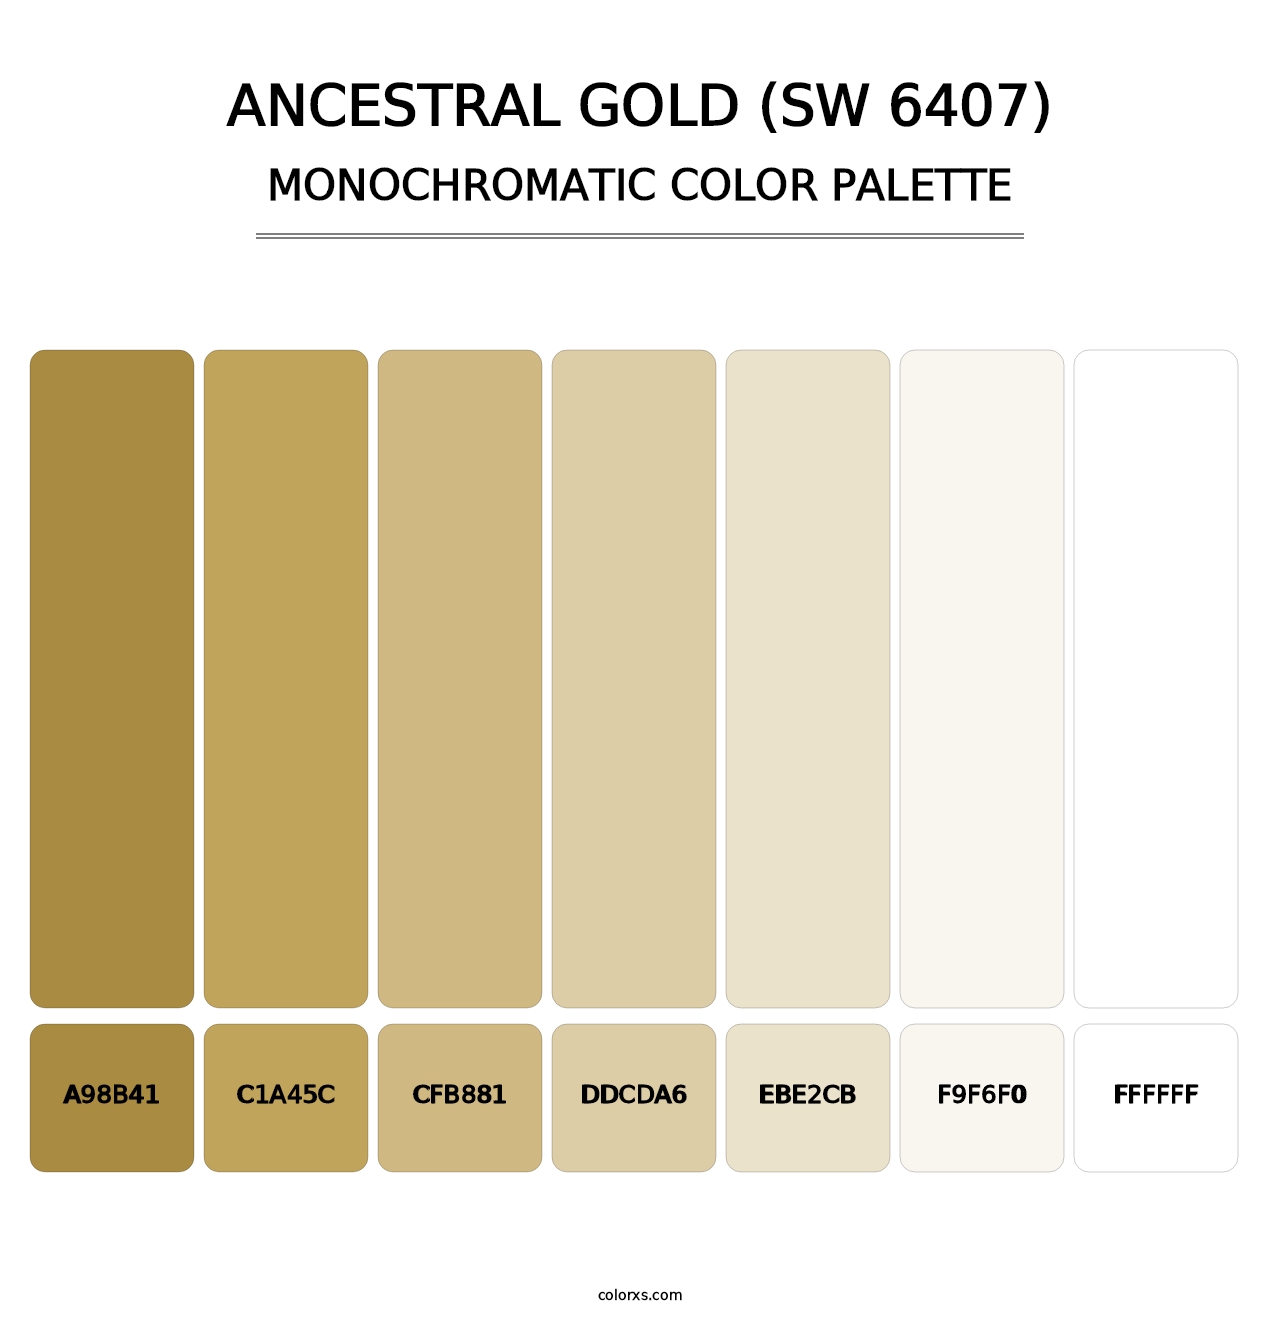 Ancestral Gold (SW 6407) - Monochromatic Color Palette